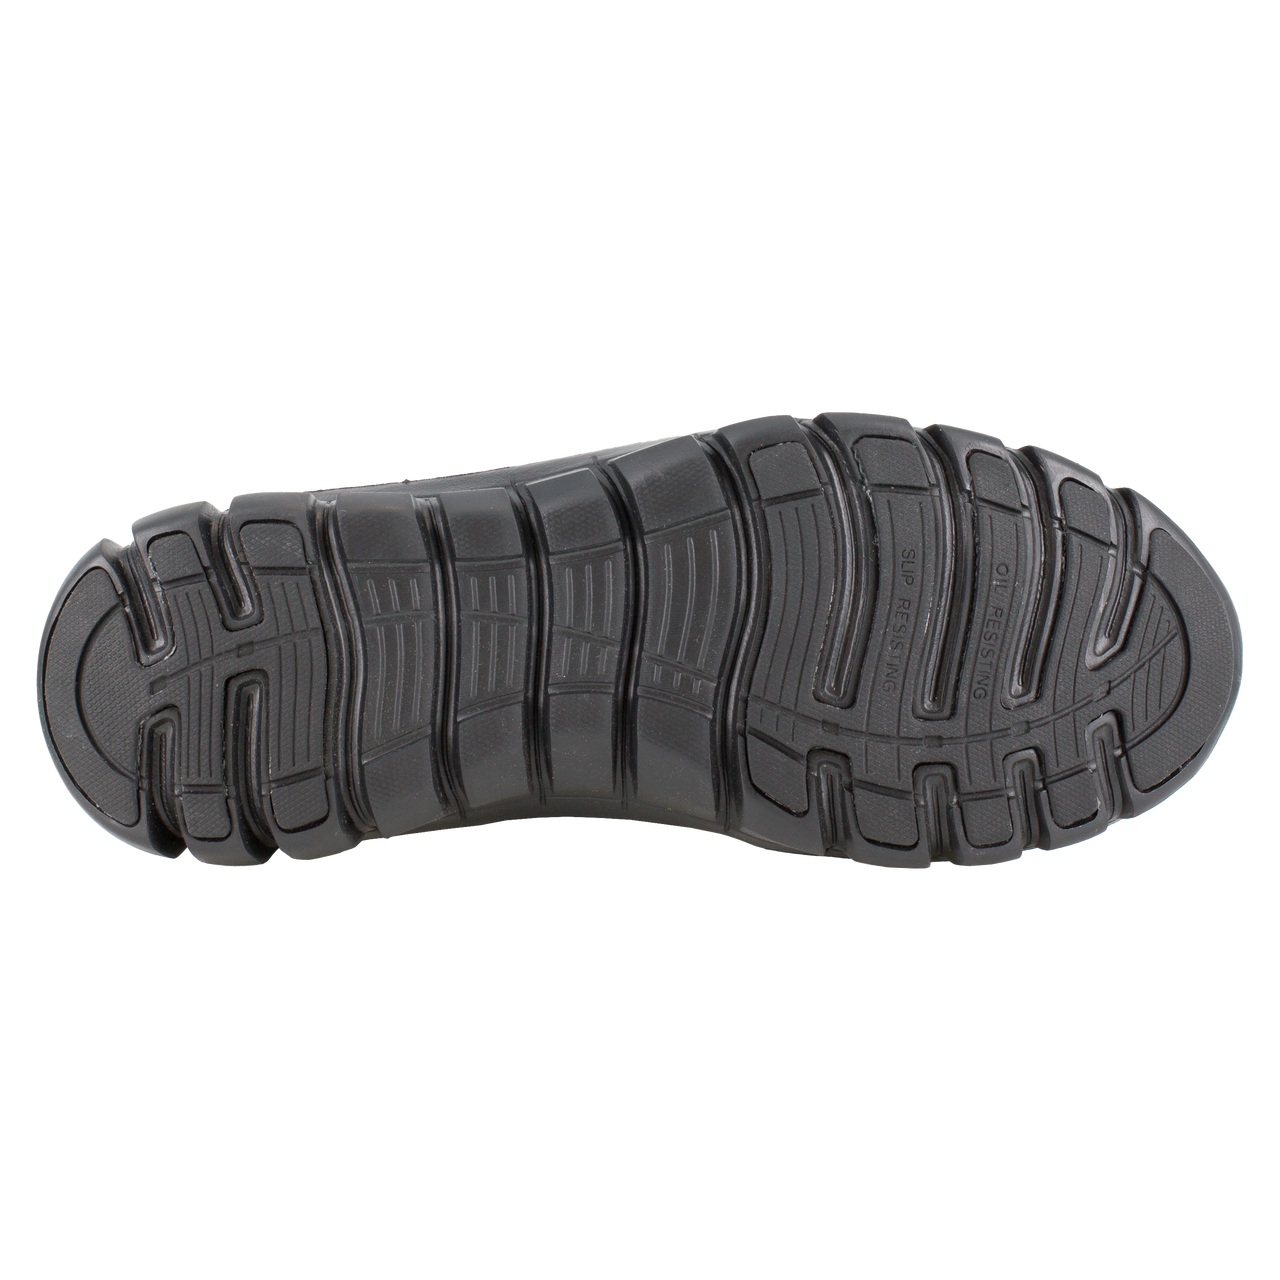 Reebok Sublite Cushion Tactical - RB8405 - Men's Mid Cut Work Boots